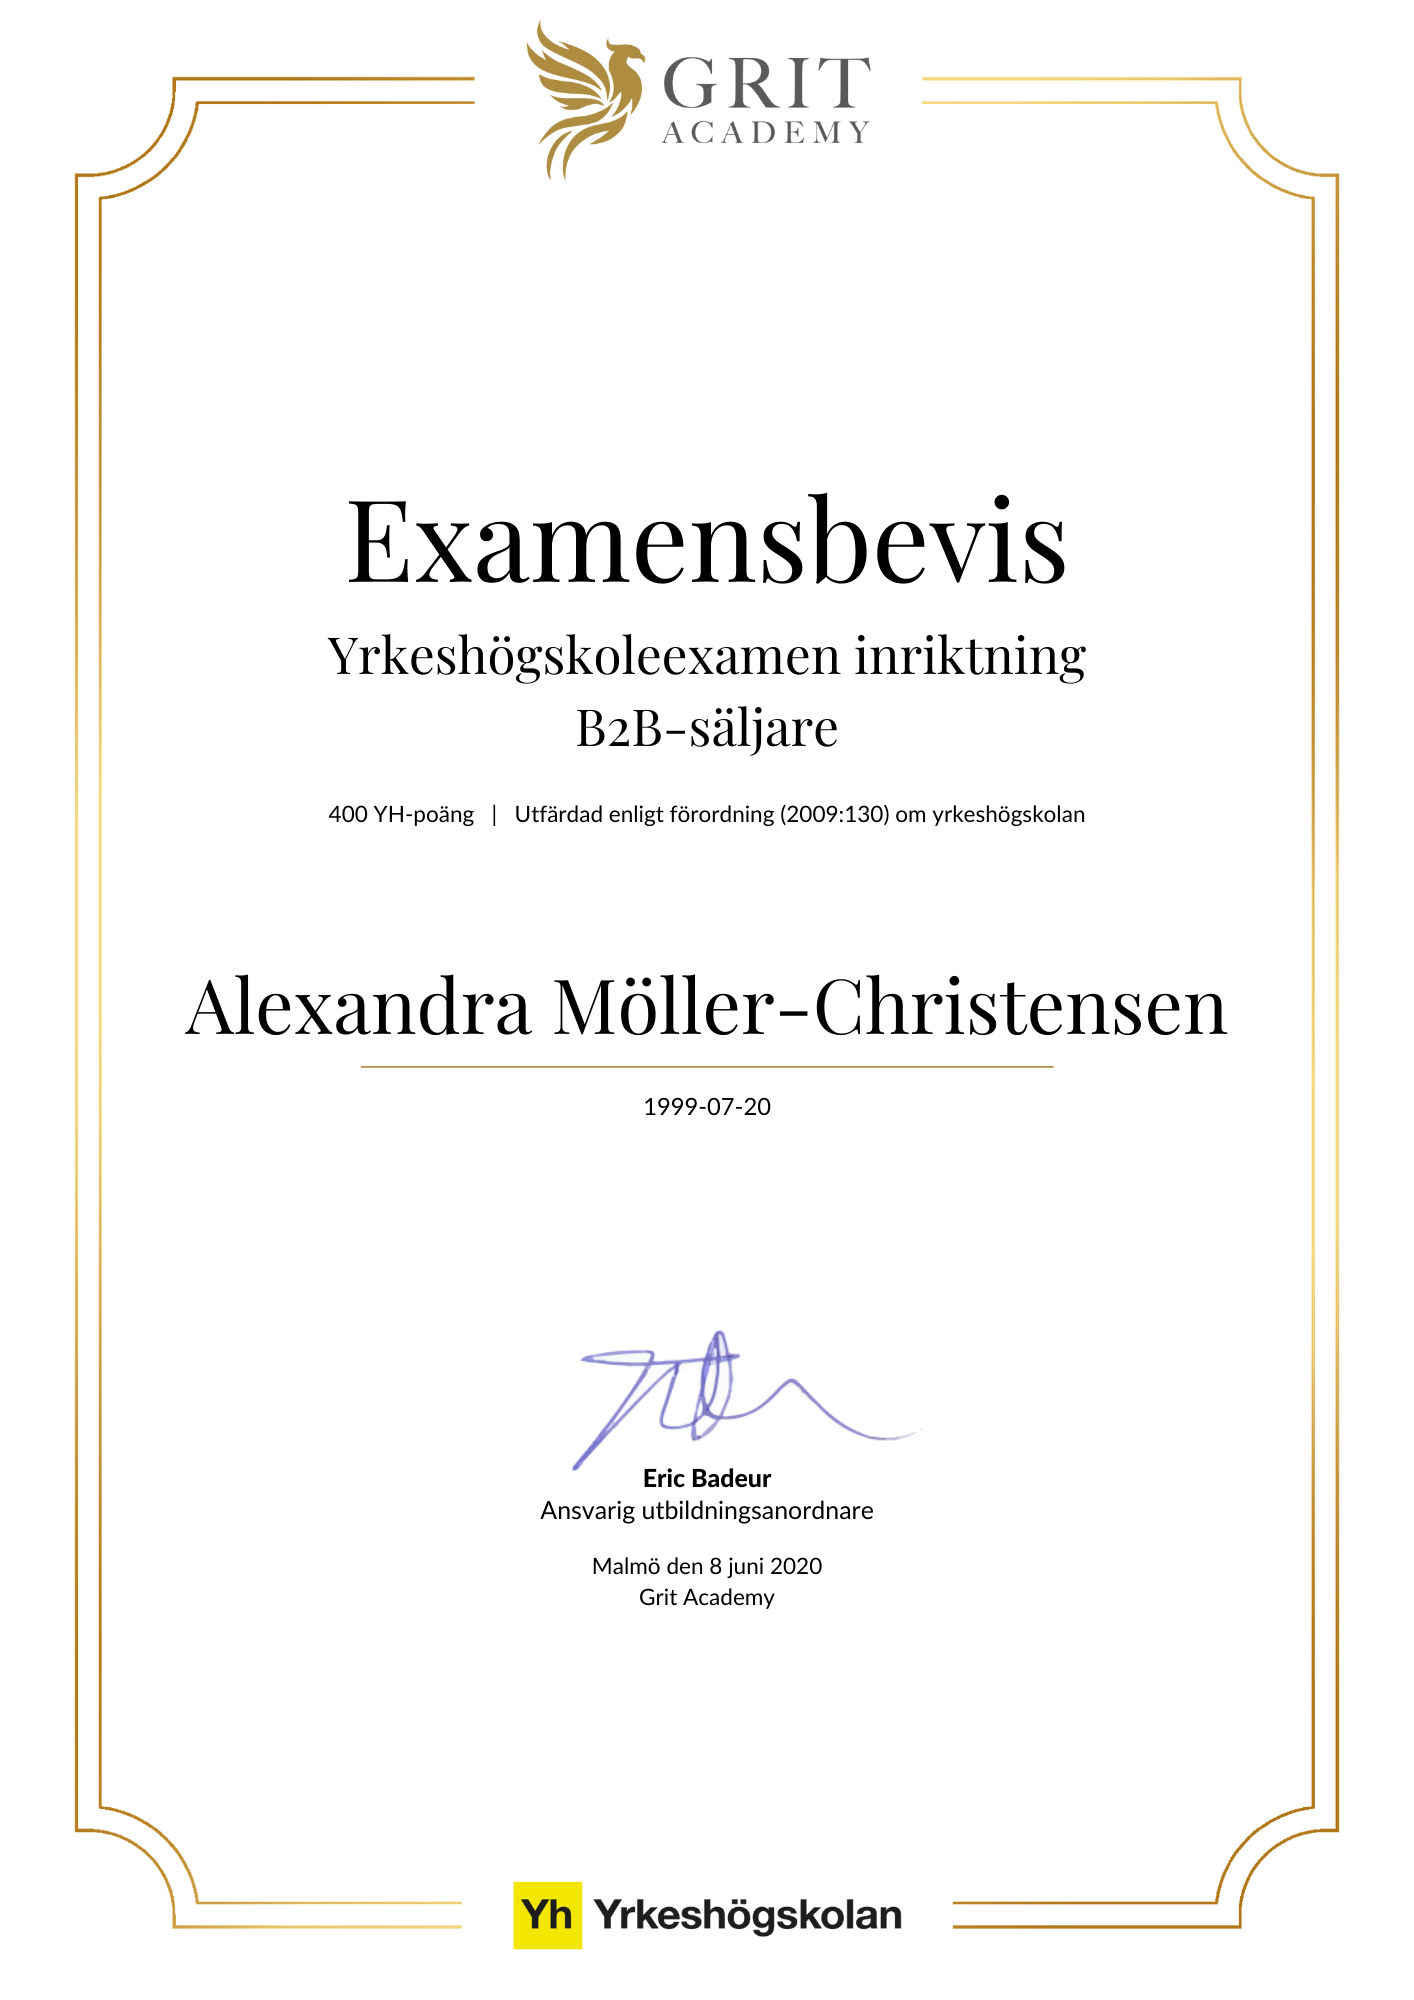 Examensbevis Alexandra Möller-Christensen - 1